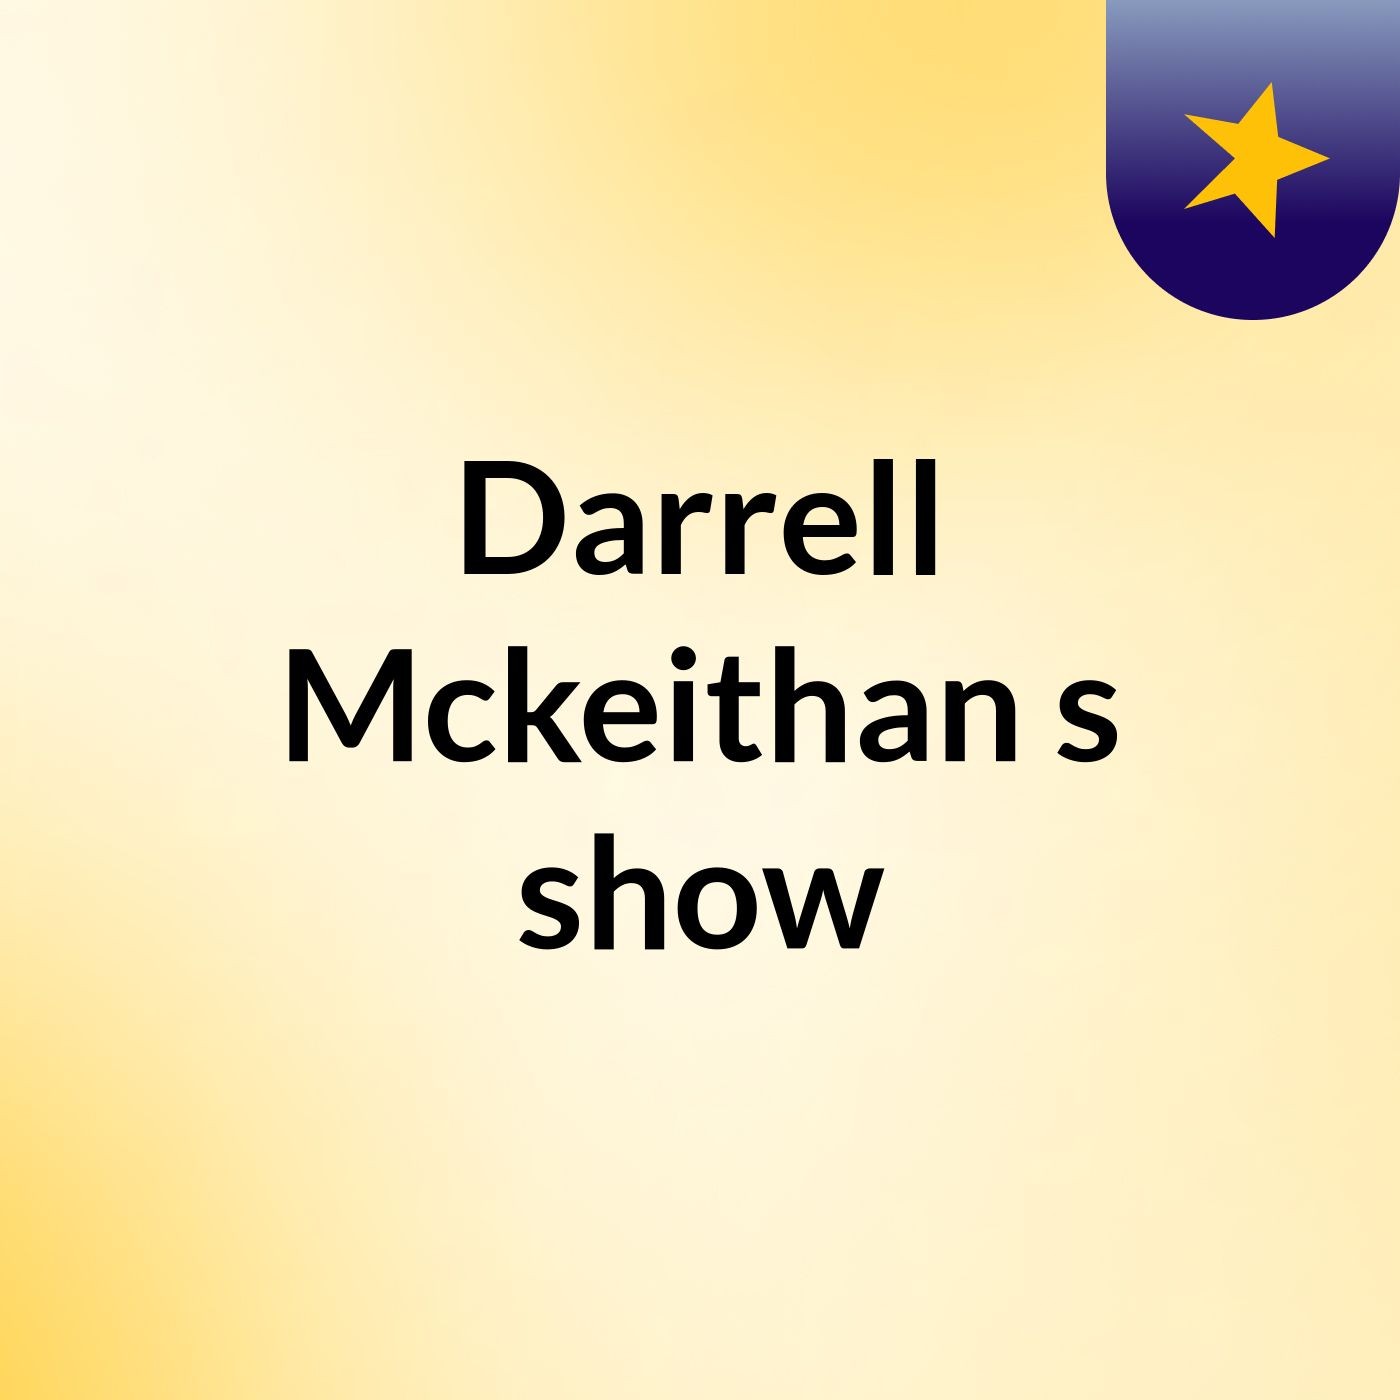 Episode 3 - Darrell Mckeithan's show